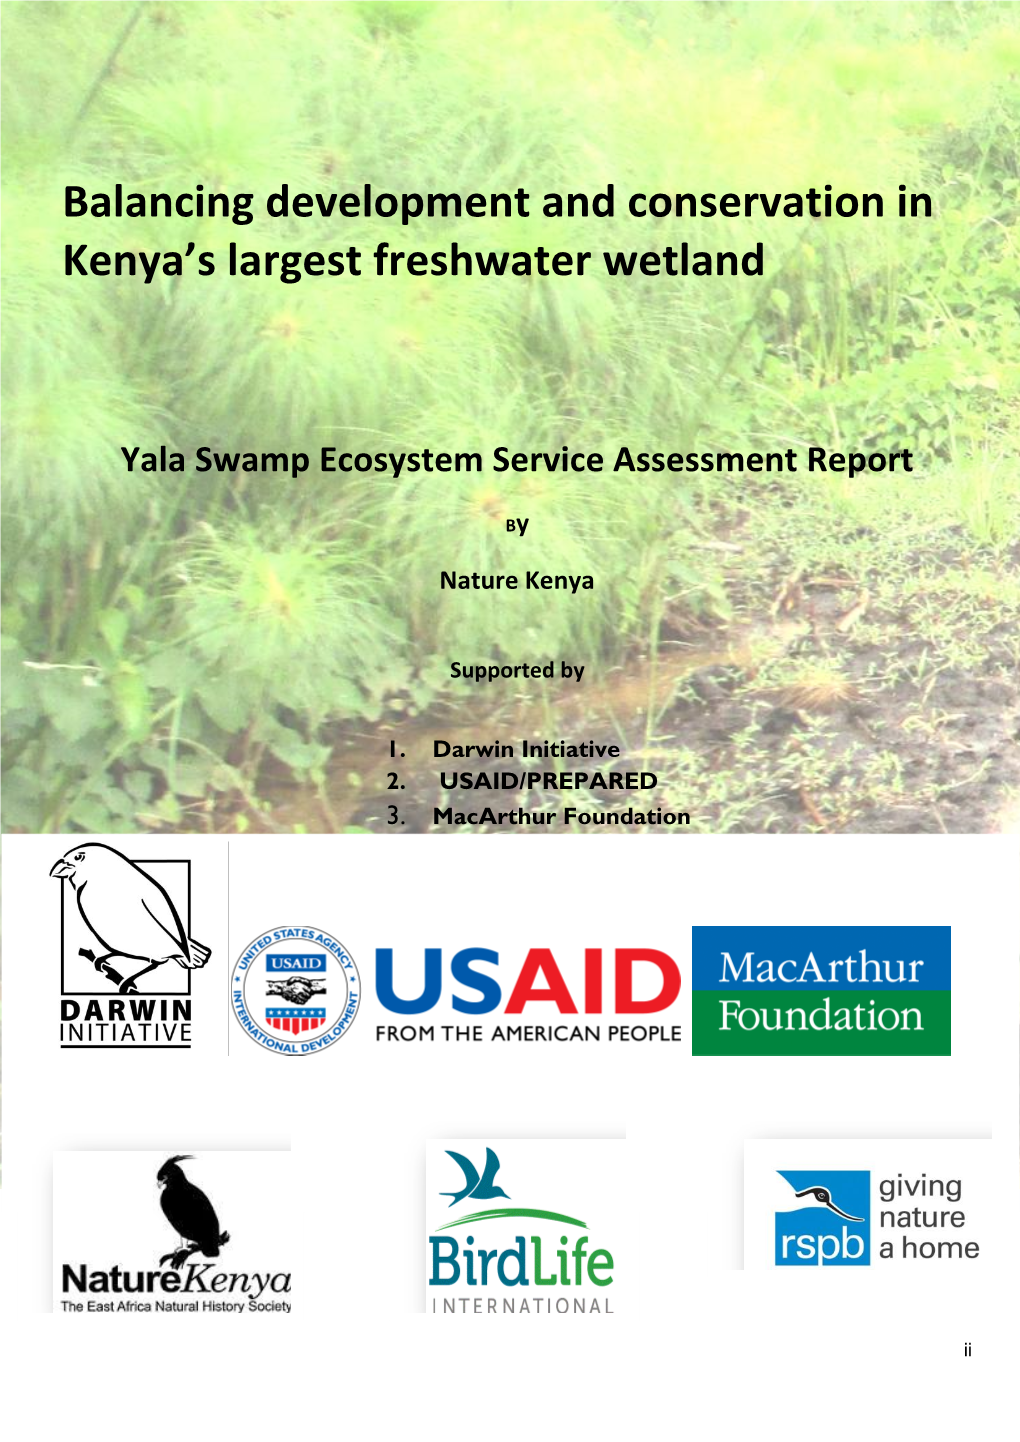 Yala Swamp Ecosystem Service Assessment Report